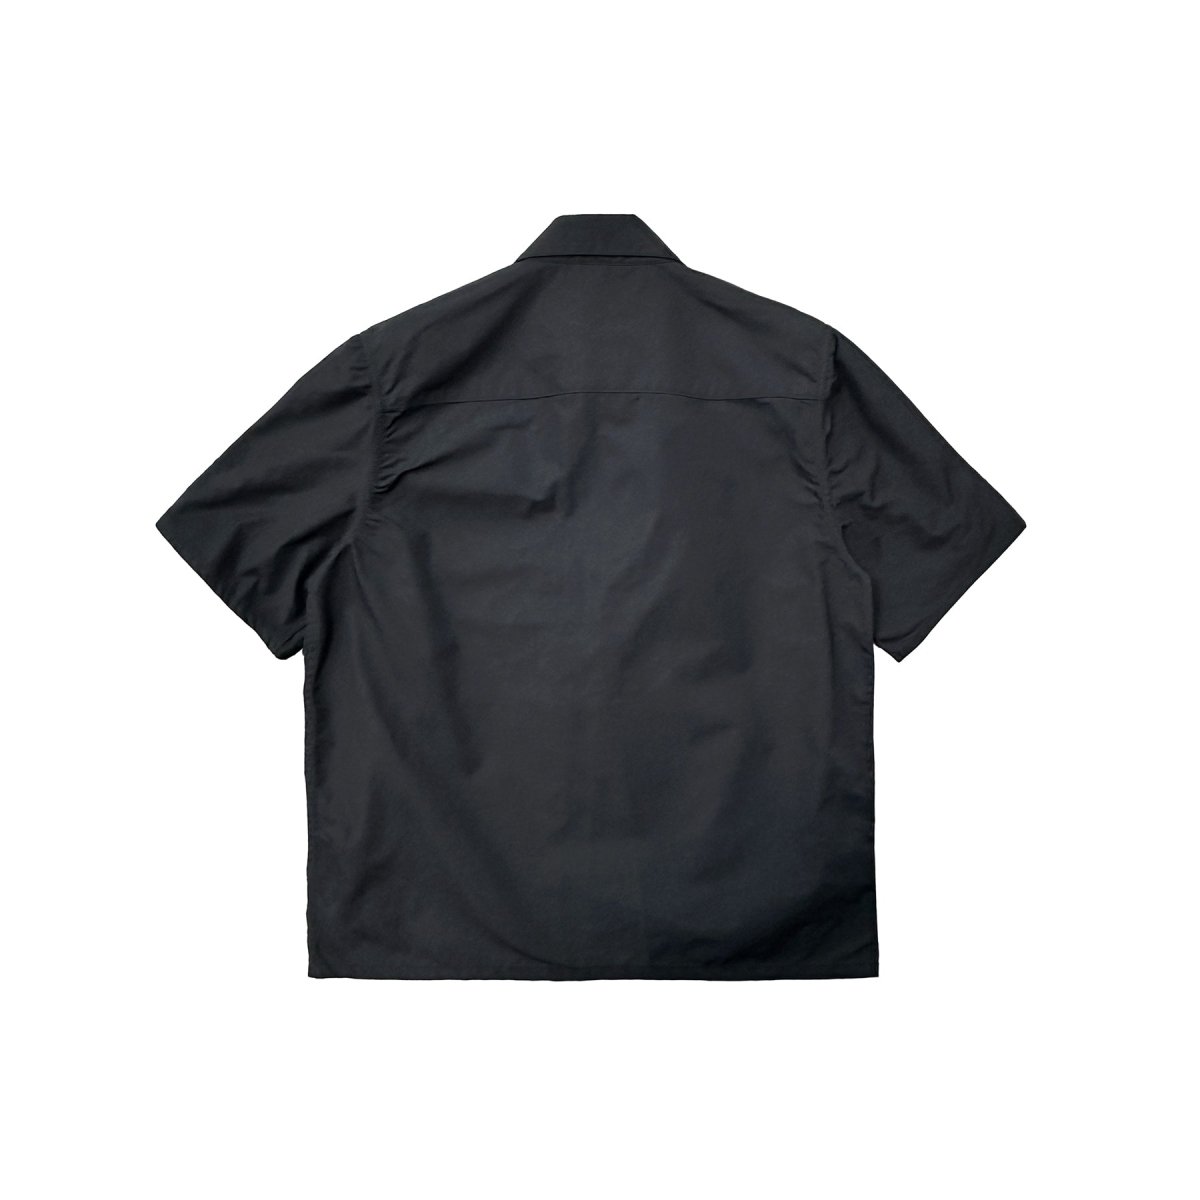 Chrome Hearts Zip Nylon Leather Patchwork Shirt Jacket - SHENGLI ROAD MARKET